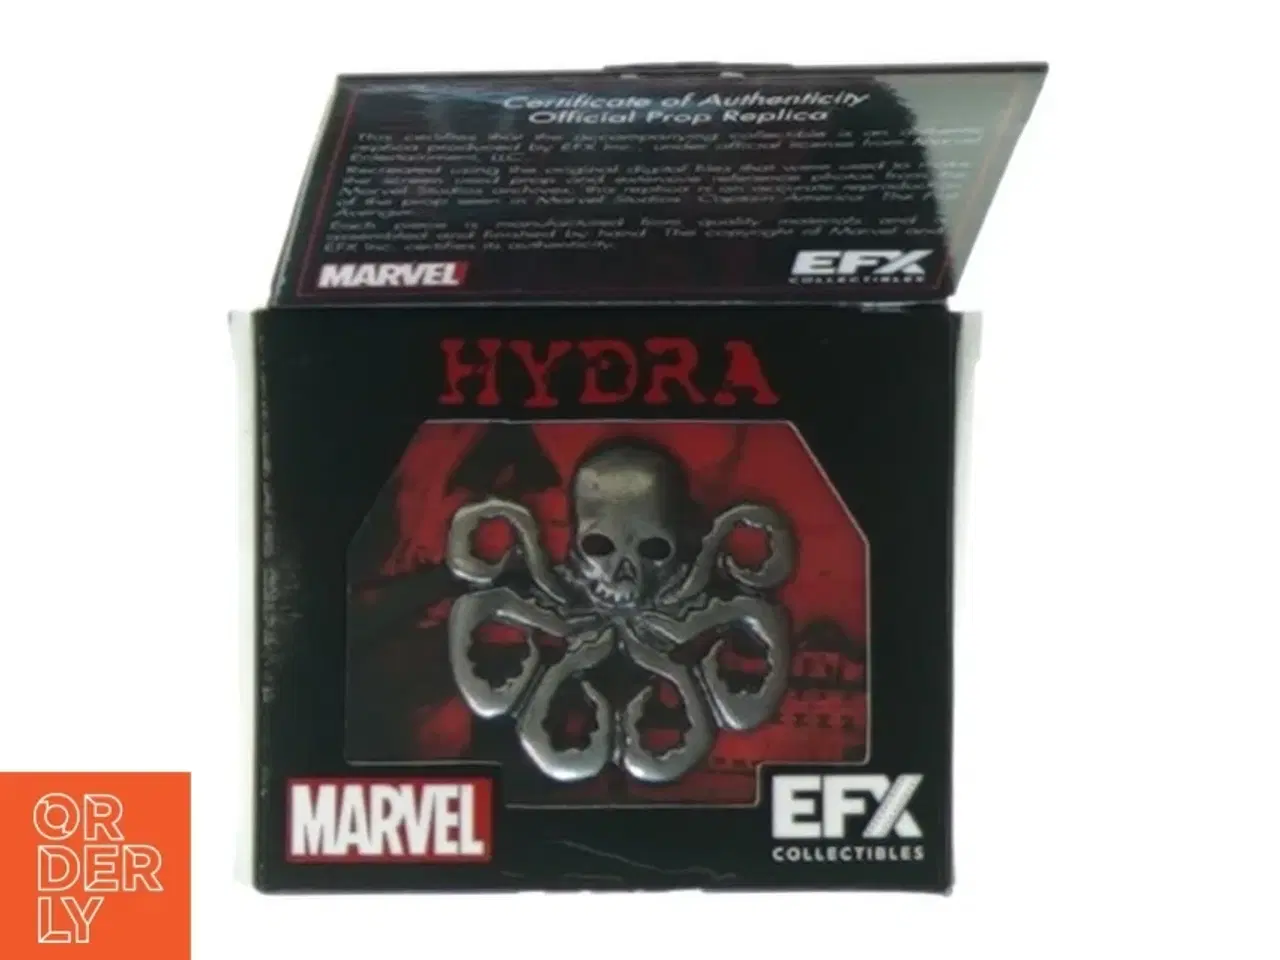 Billede 1 - Captain America Hydra pin - Official prop replica fra Marvel (str. 8 x 6 cm)